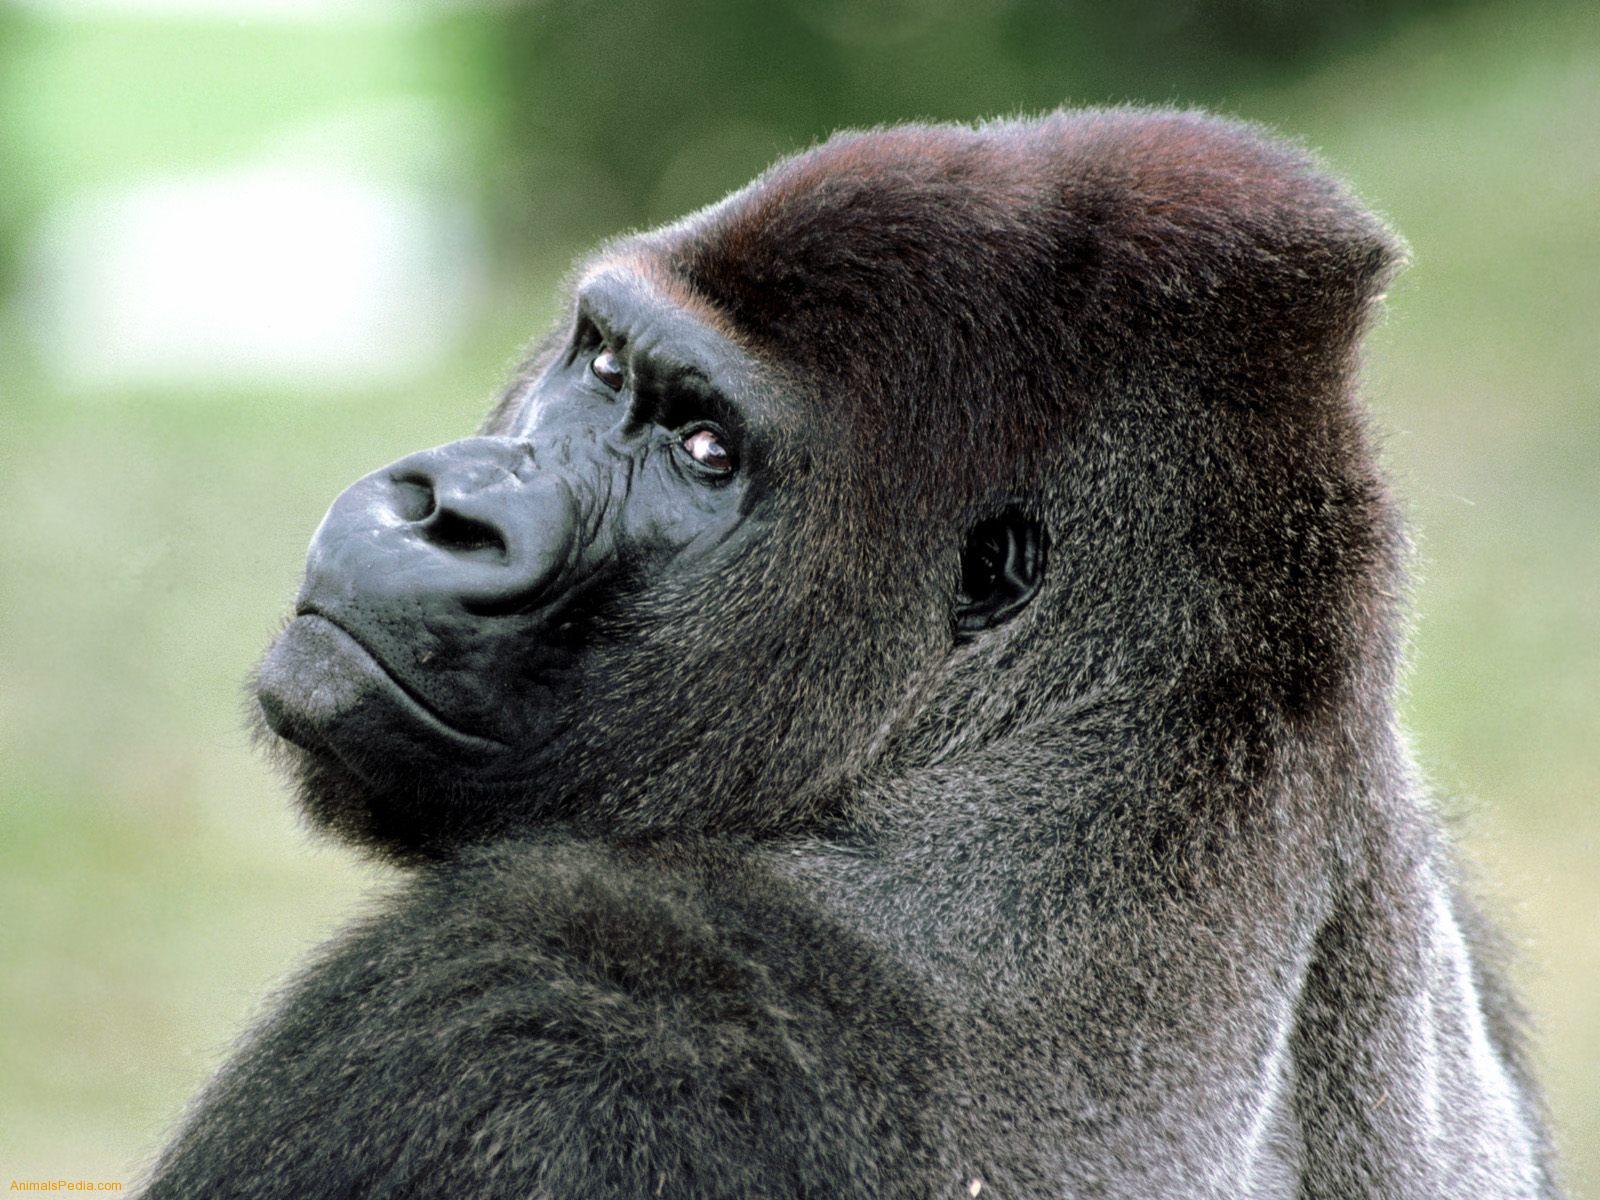 Encyclopaedia of Babies of Beautiful Wild Animals: The Baby Gorilla